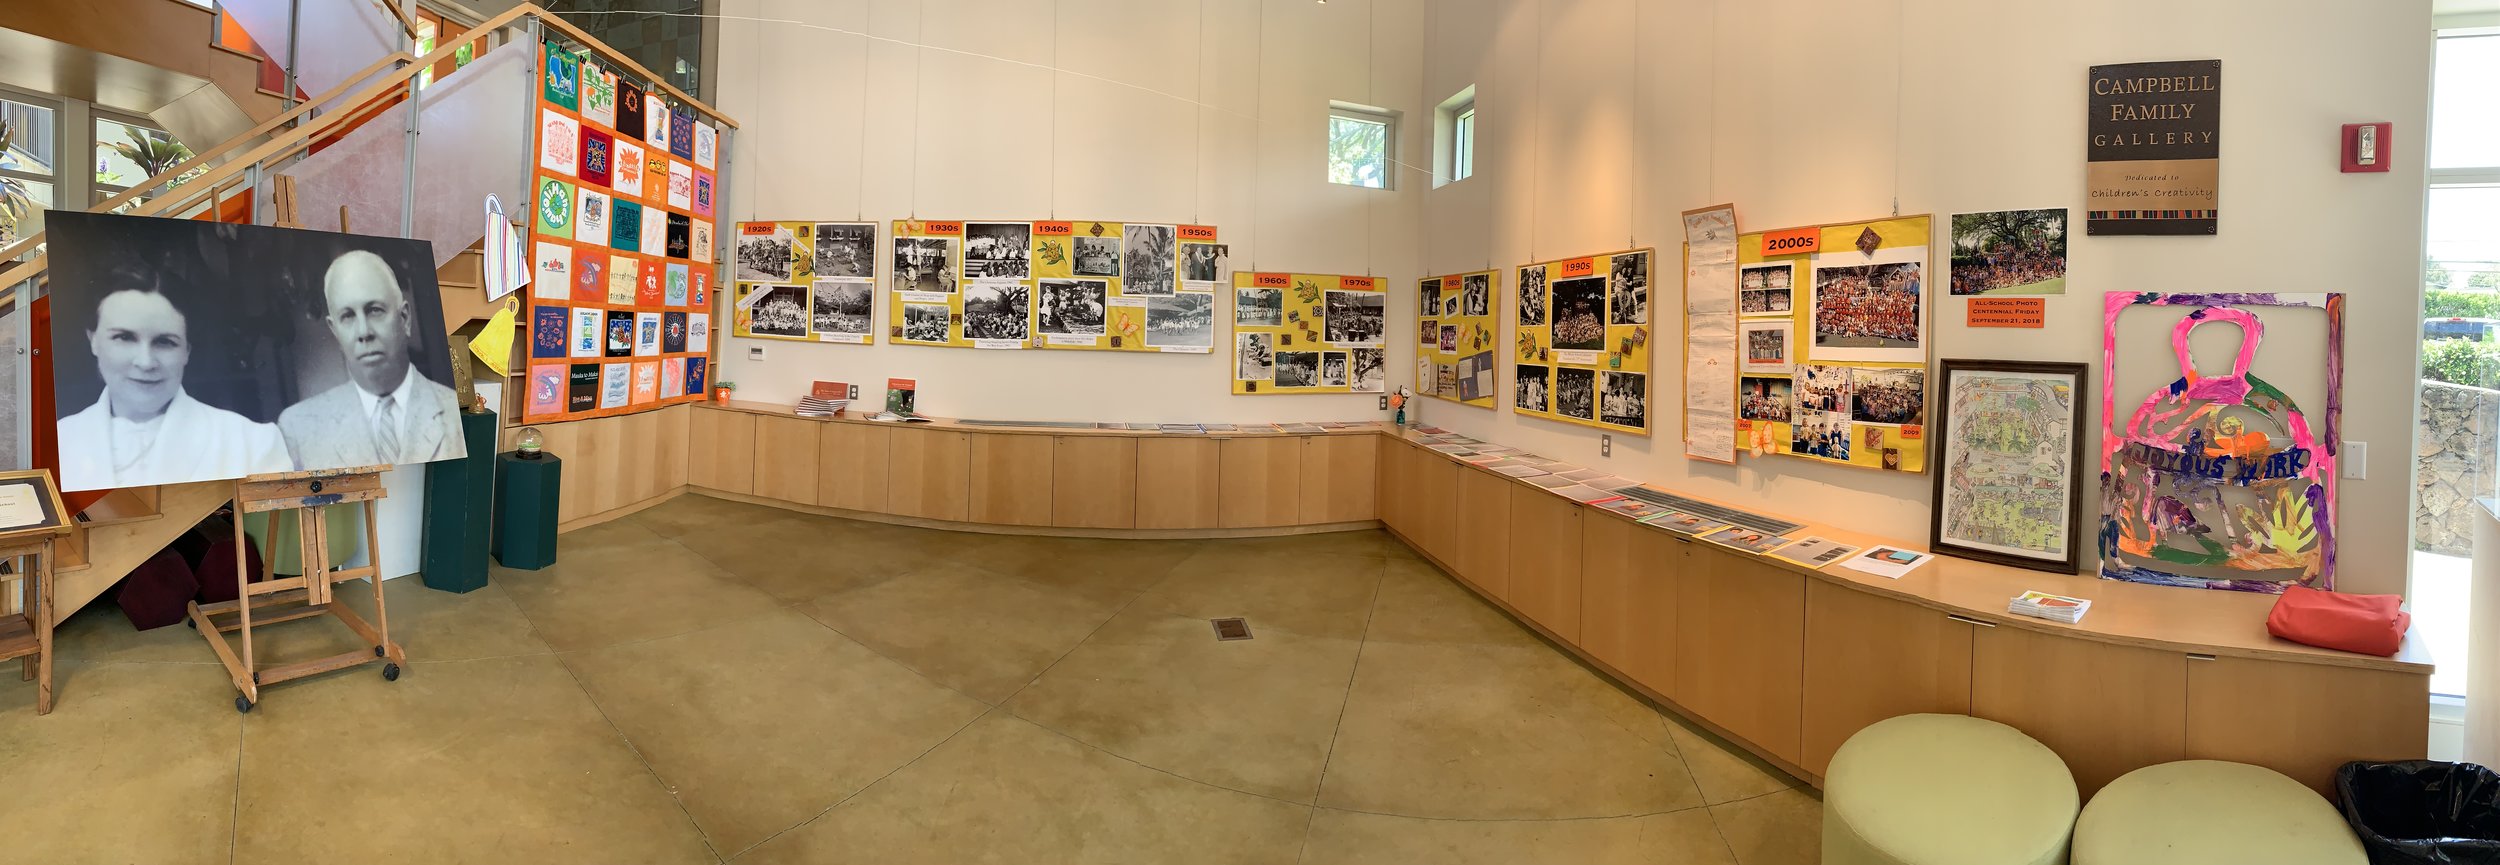 2019 Hanahauoli Alumni Day Gallery Display.jpg